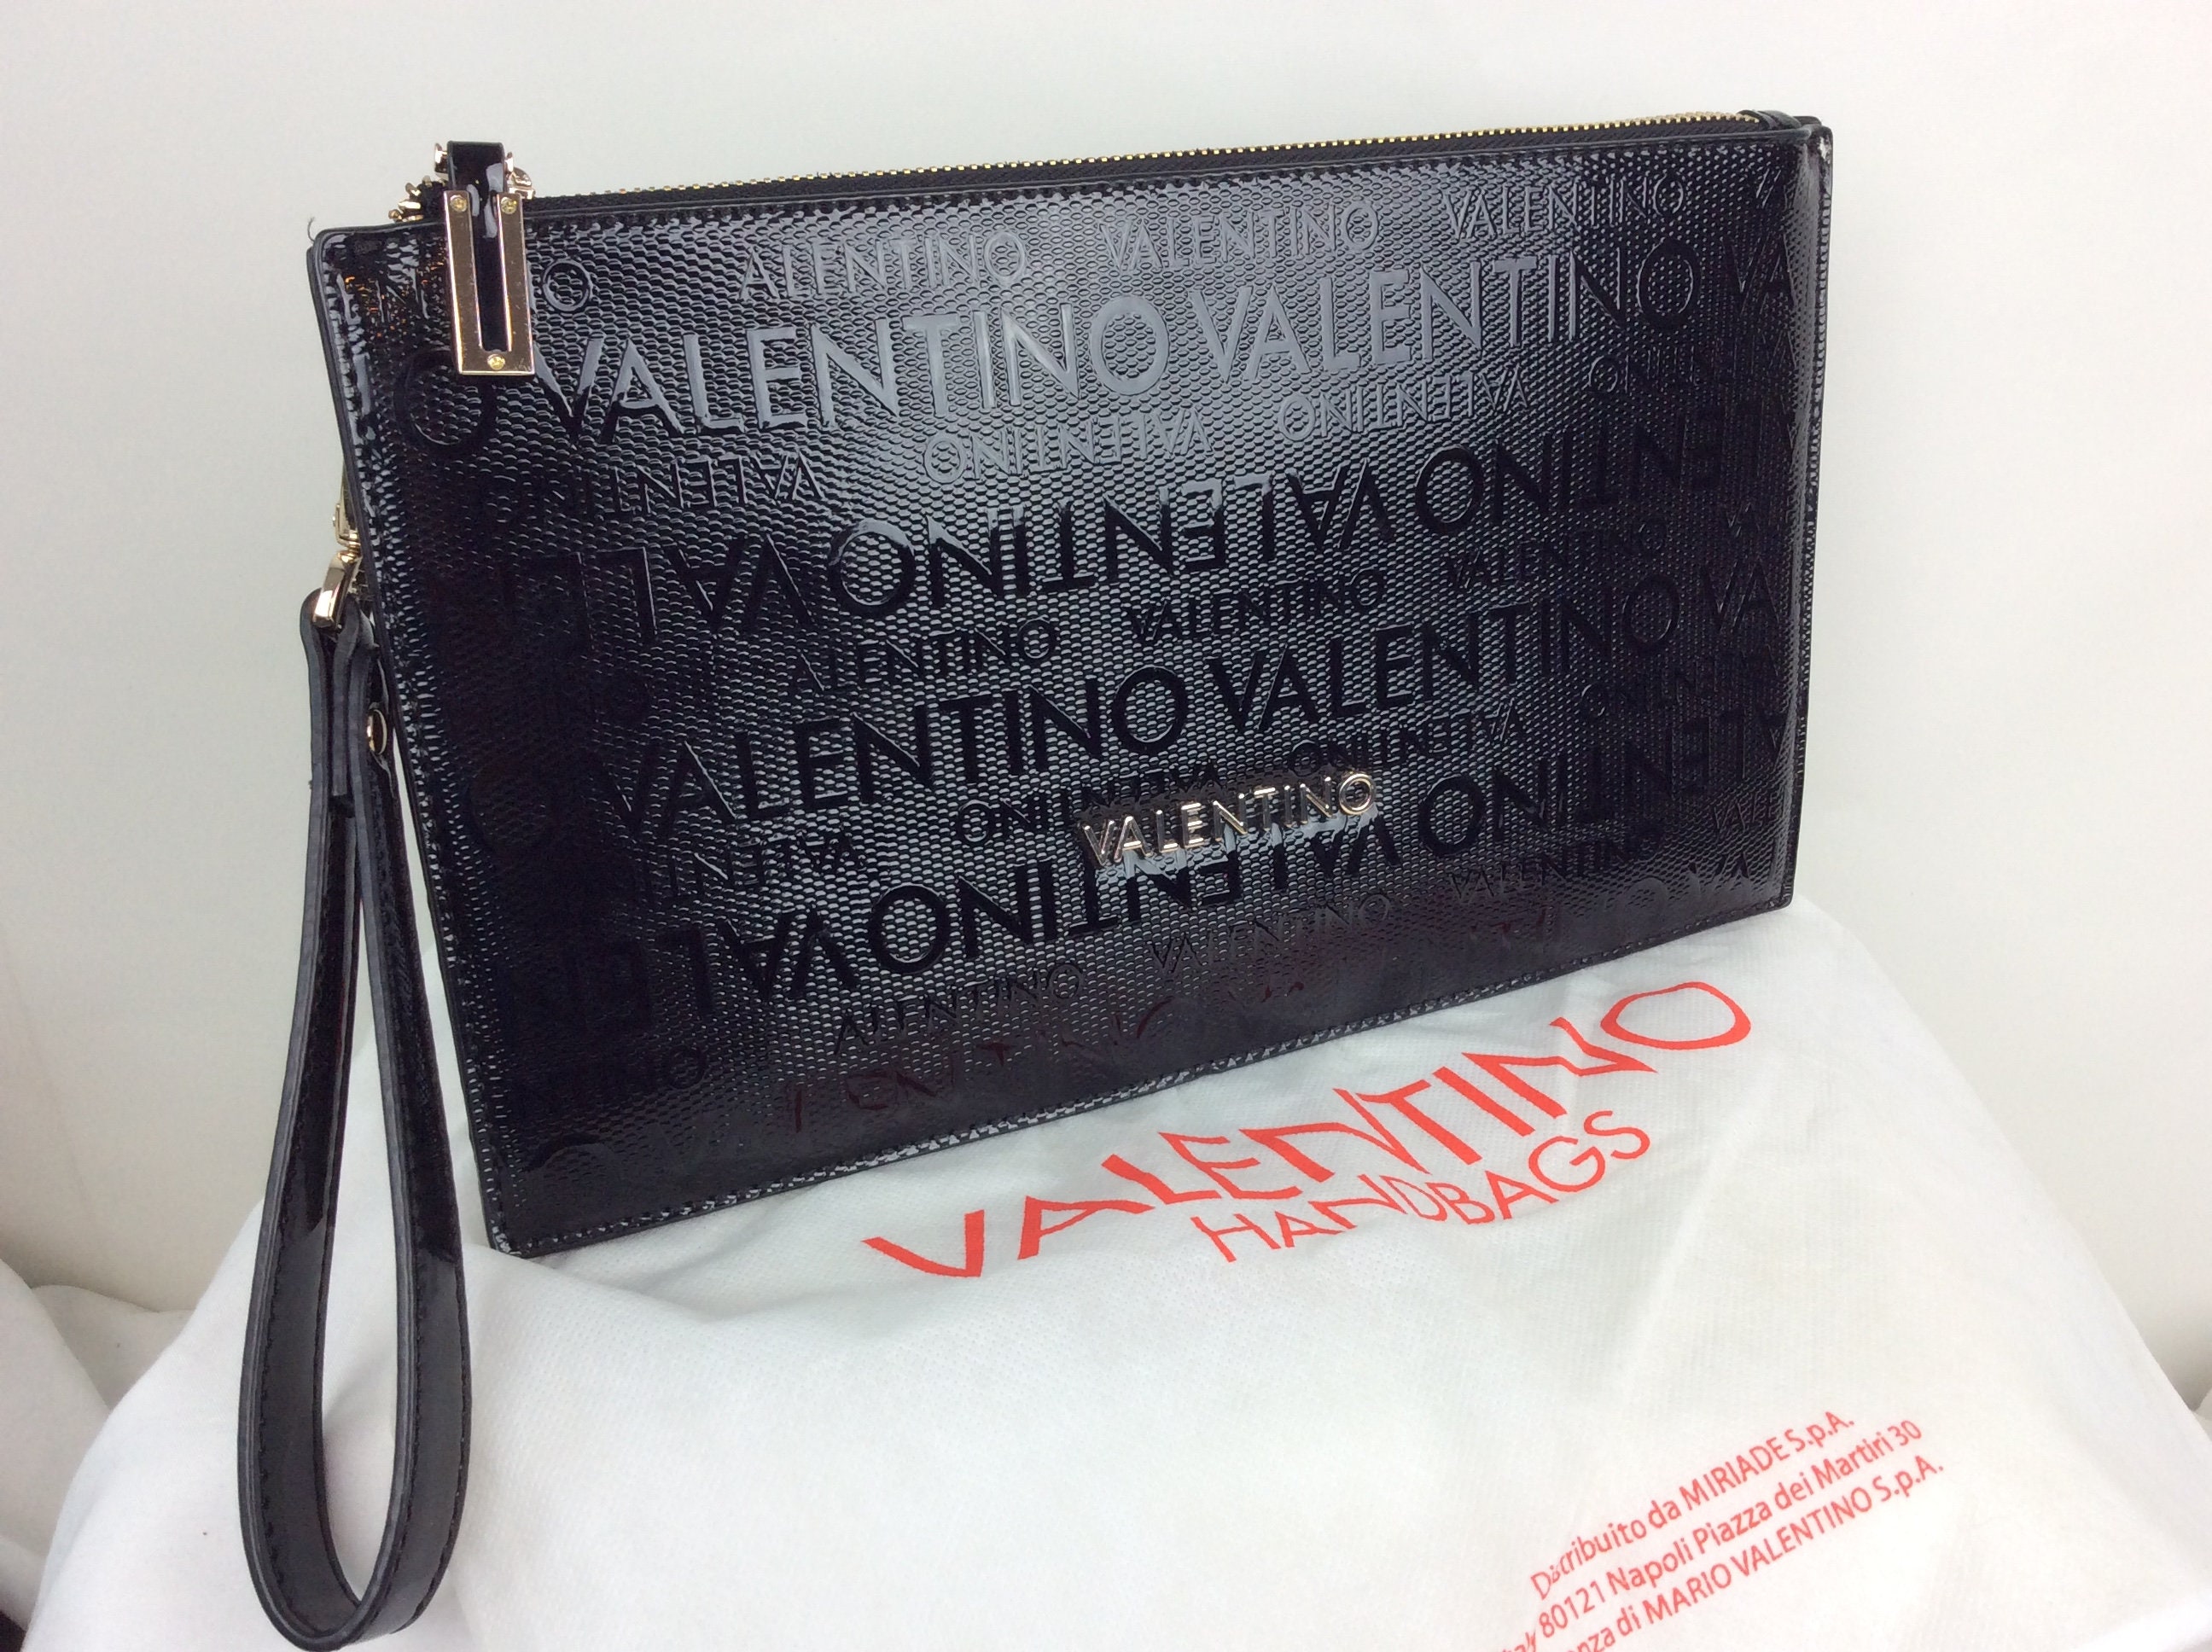 Valentino Italy Black Varnish Clutchbag 